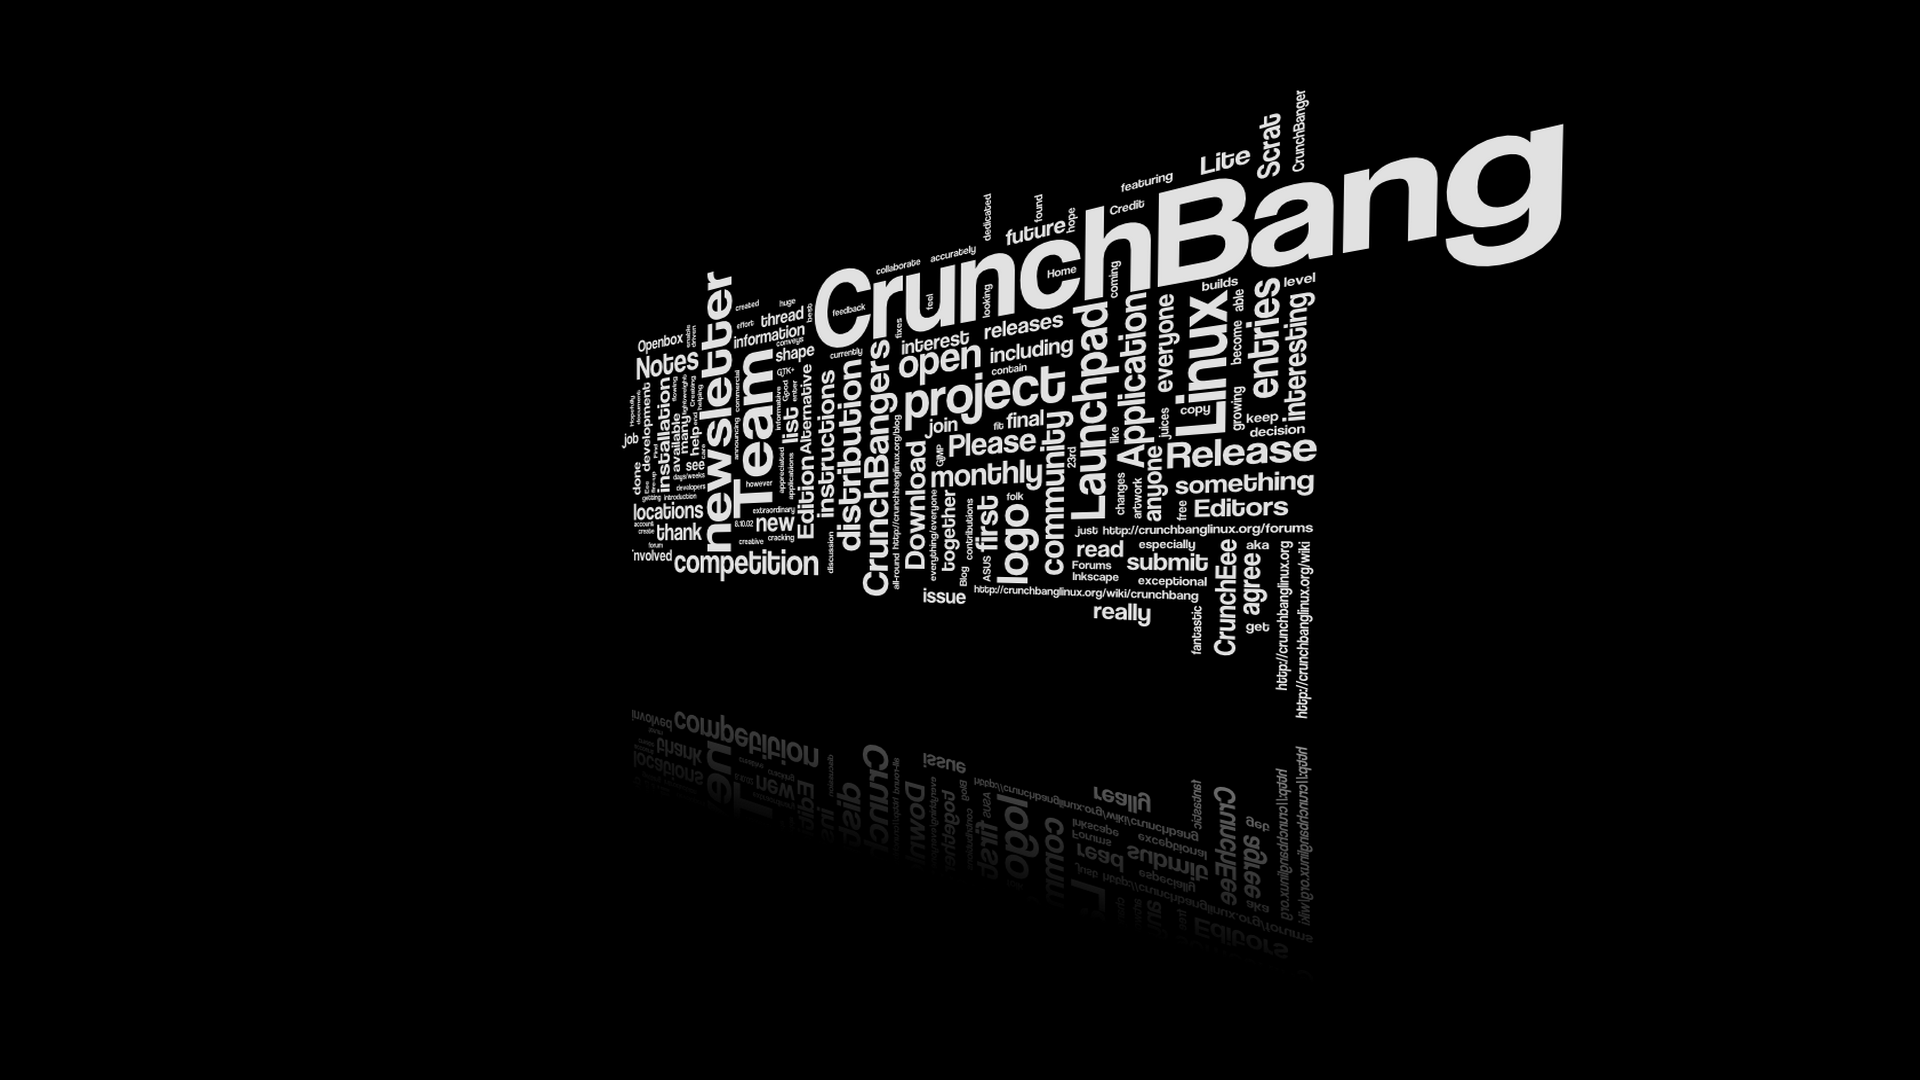 Crunchbang Linux wallpaper